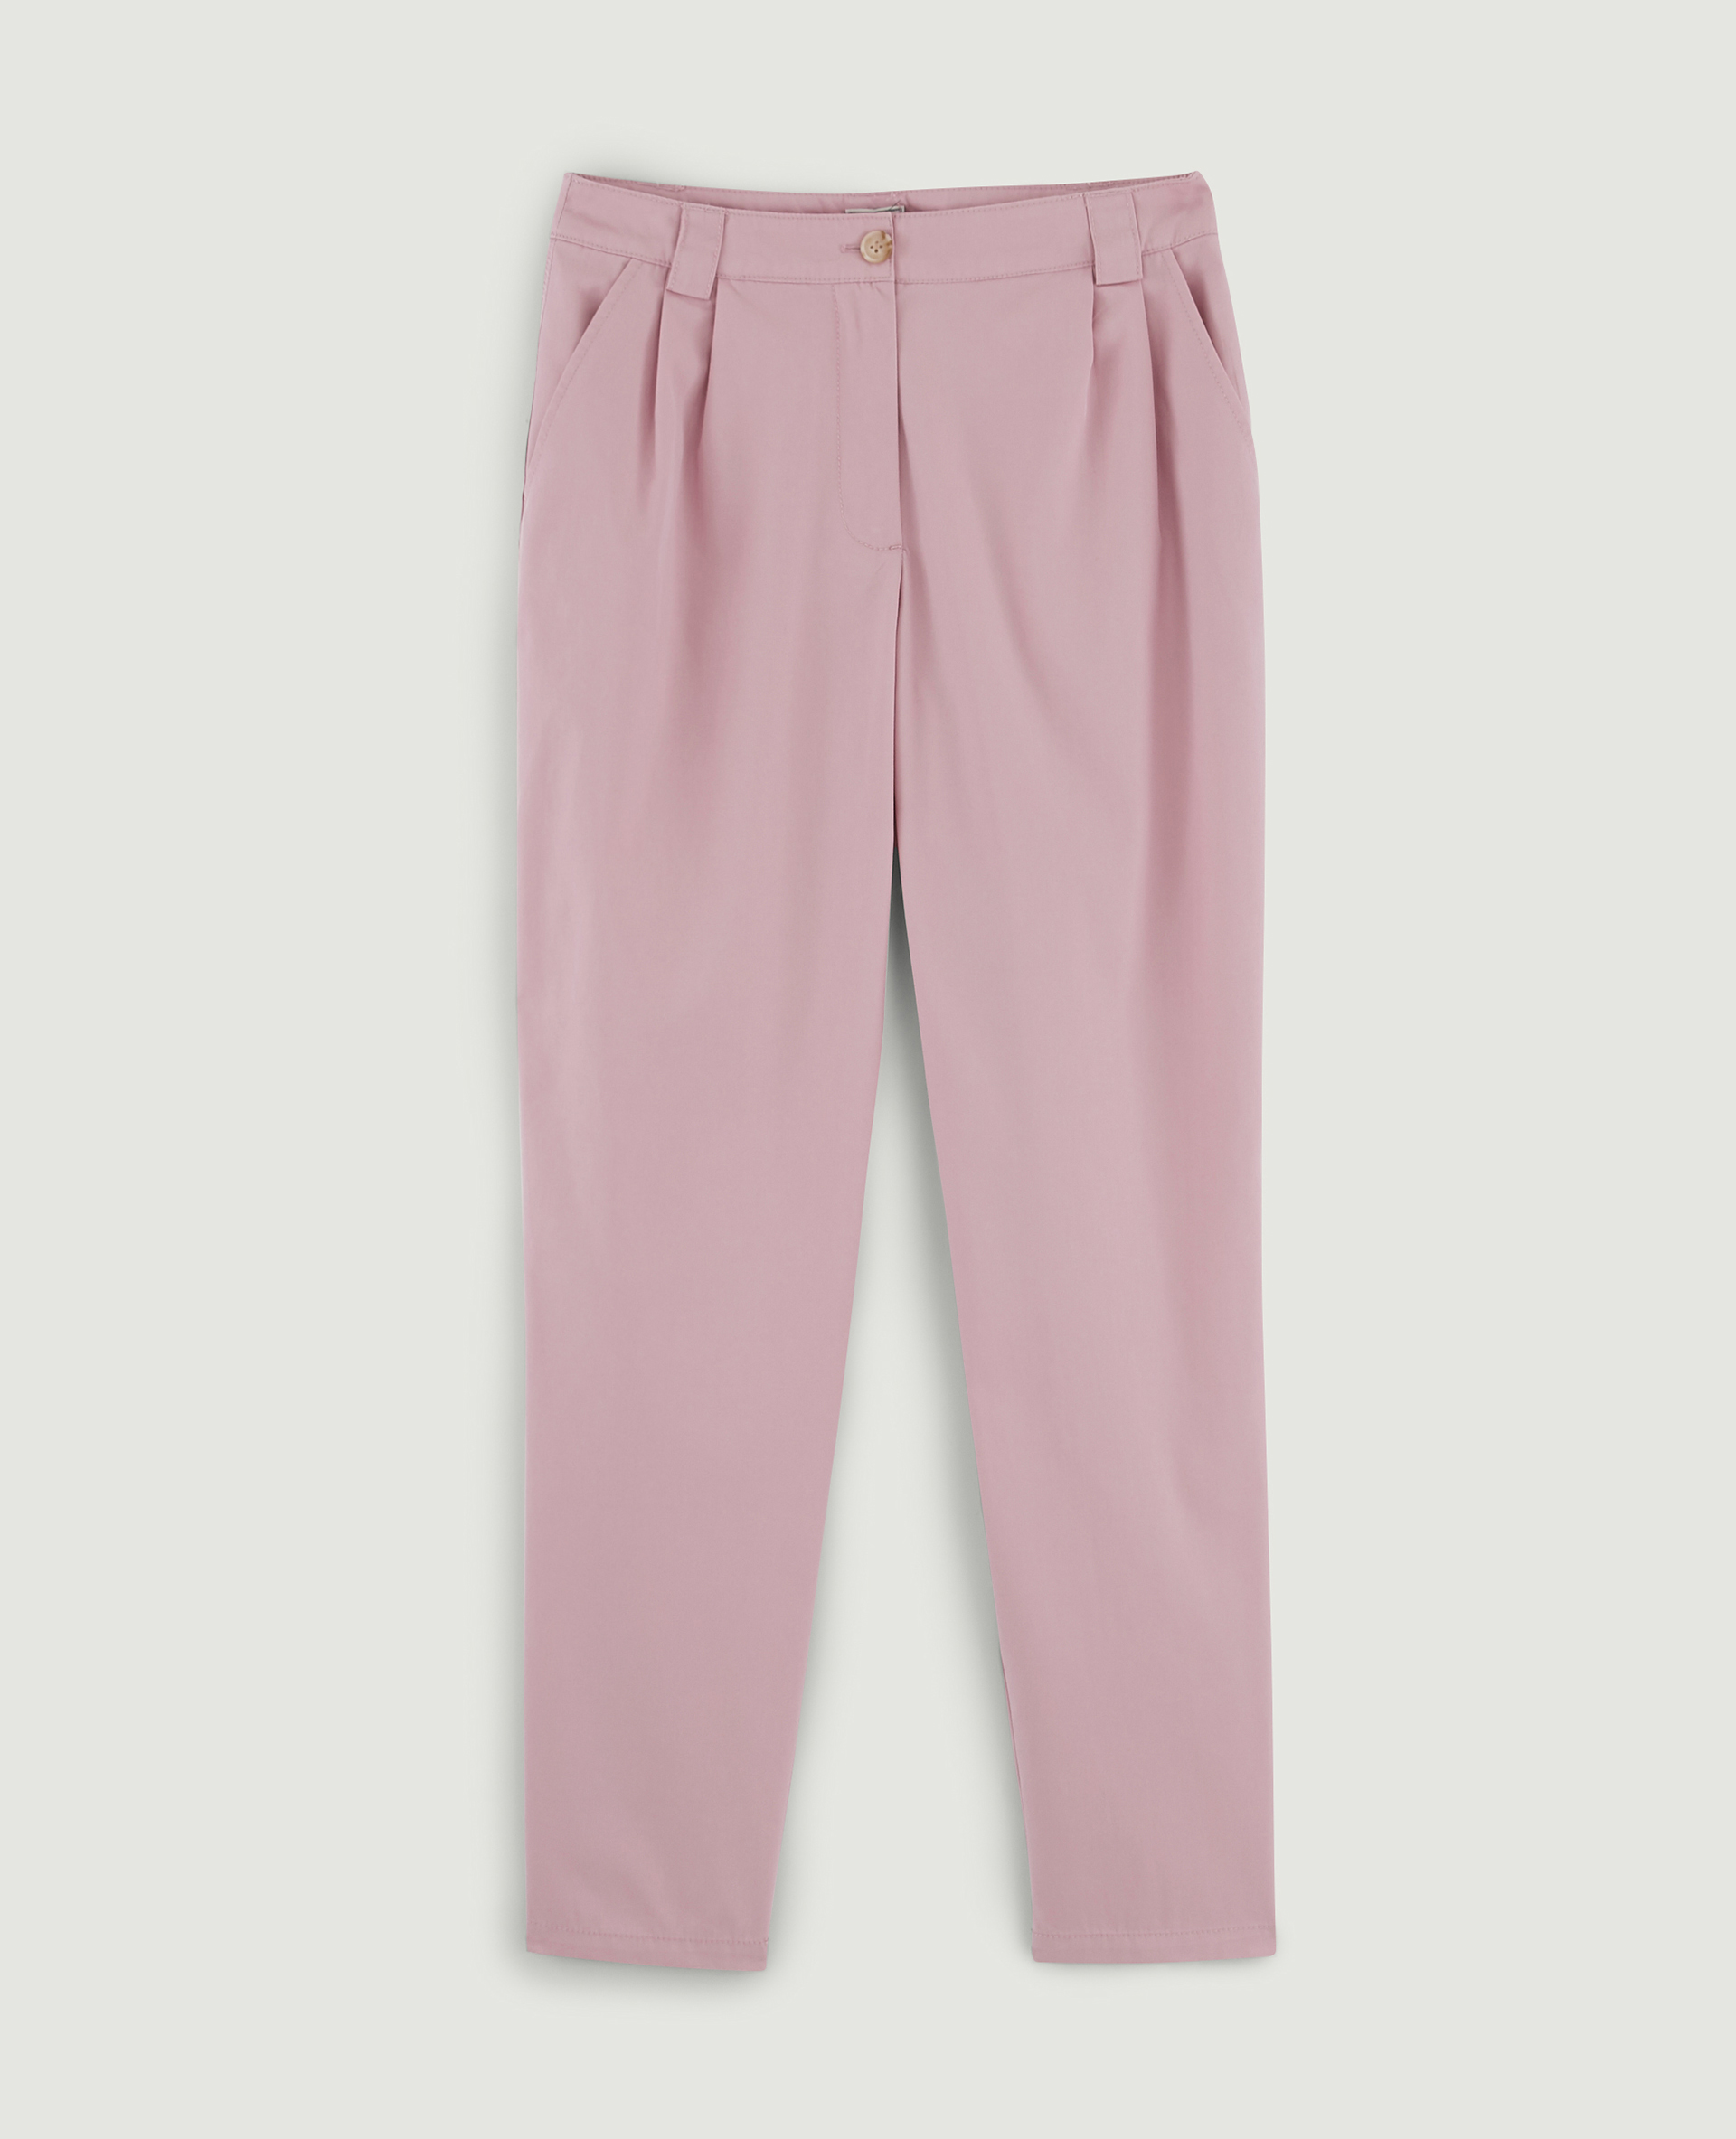 Pantalon à pinces SMALL rose - Pimkie